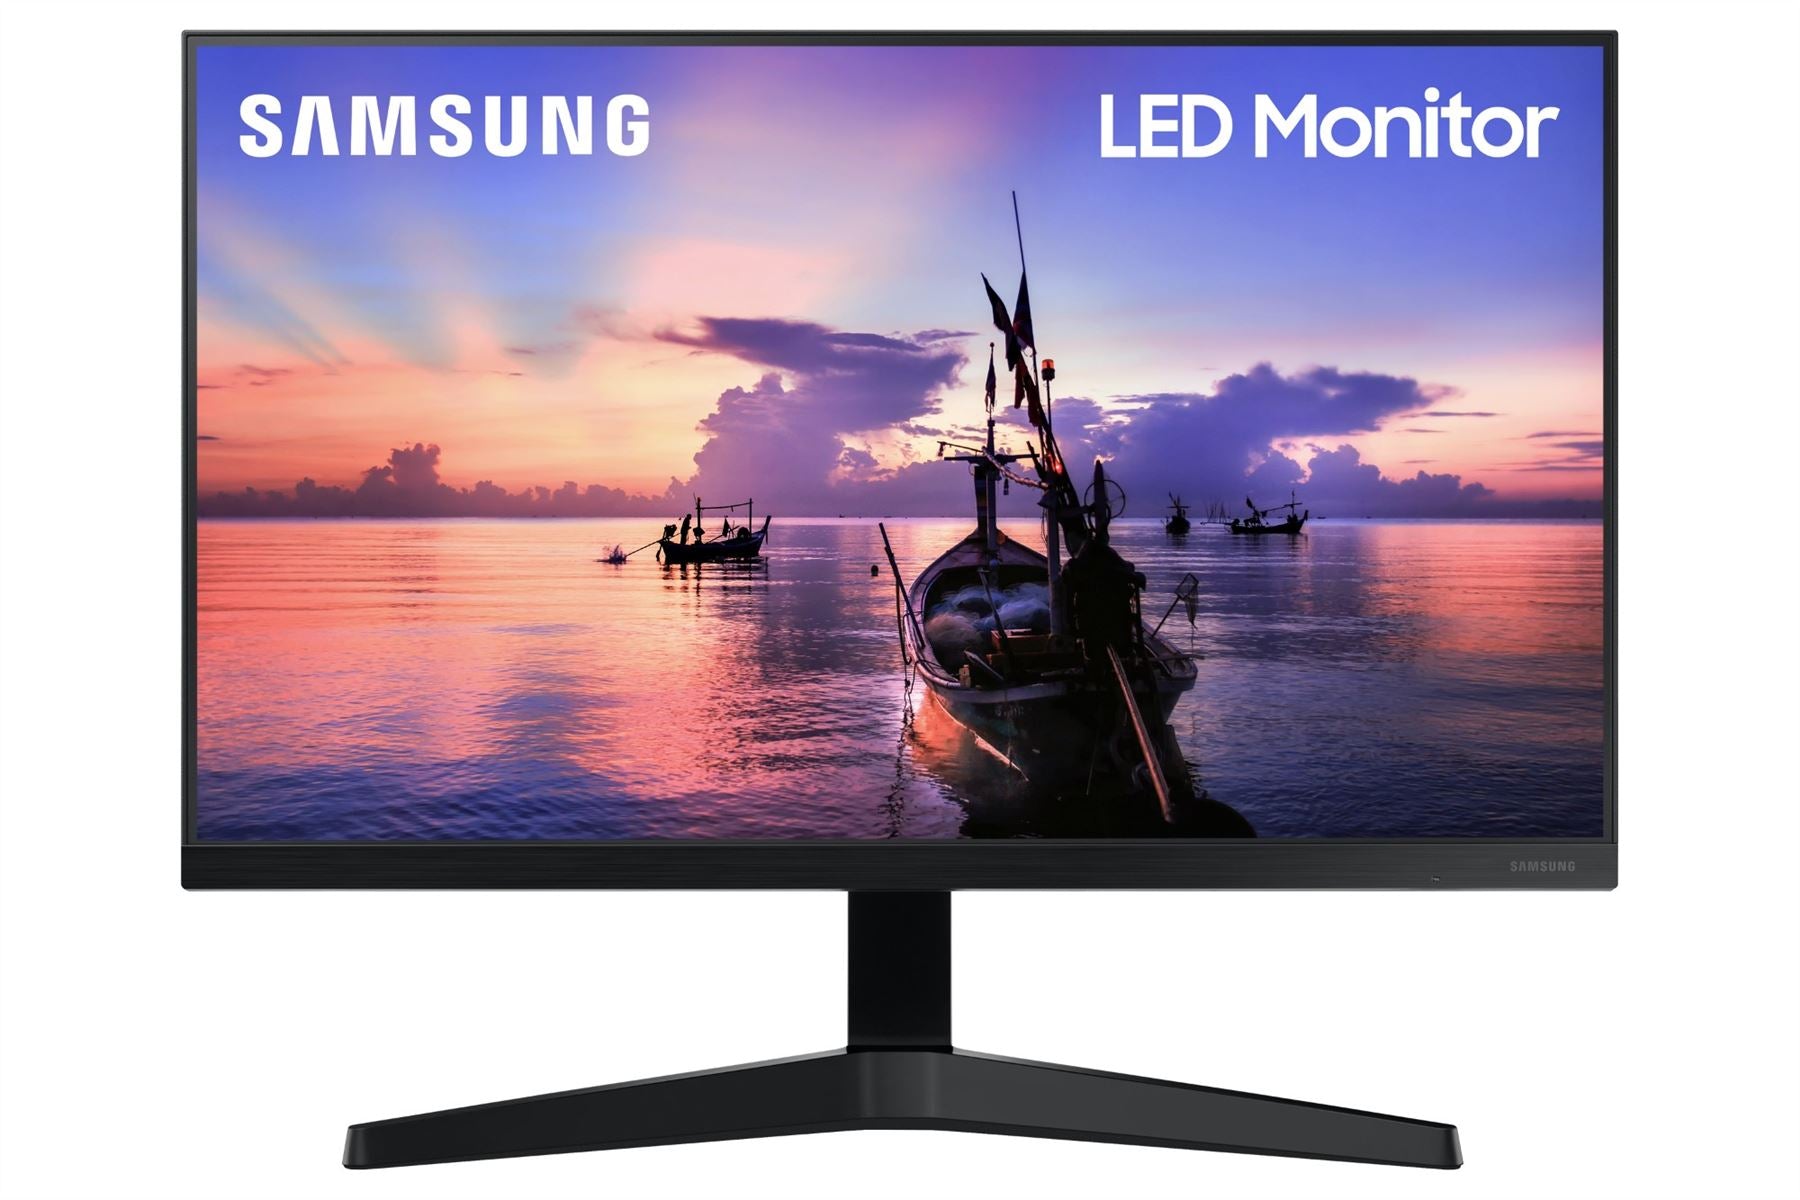 Monitors - Samsung - Clove Technology